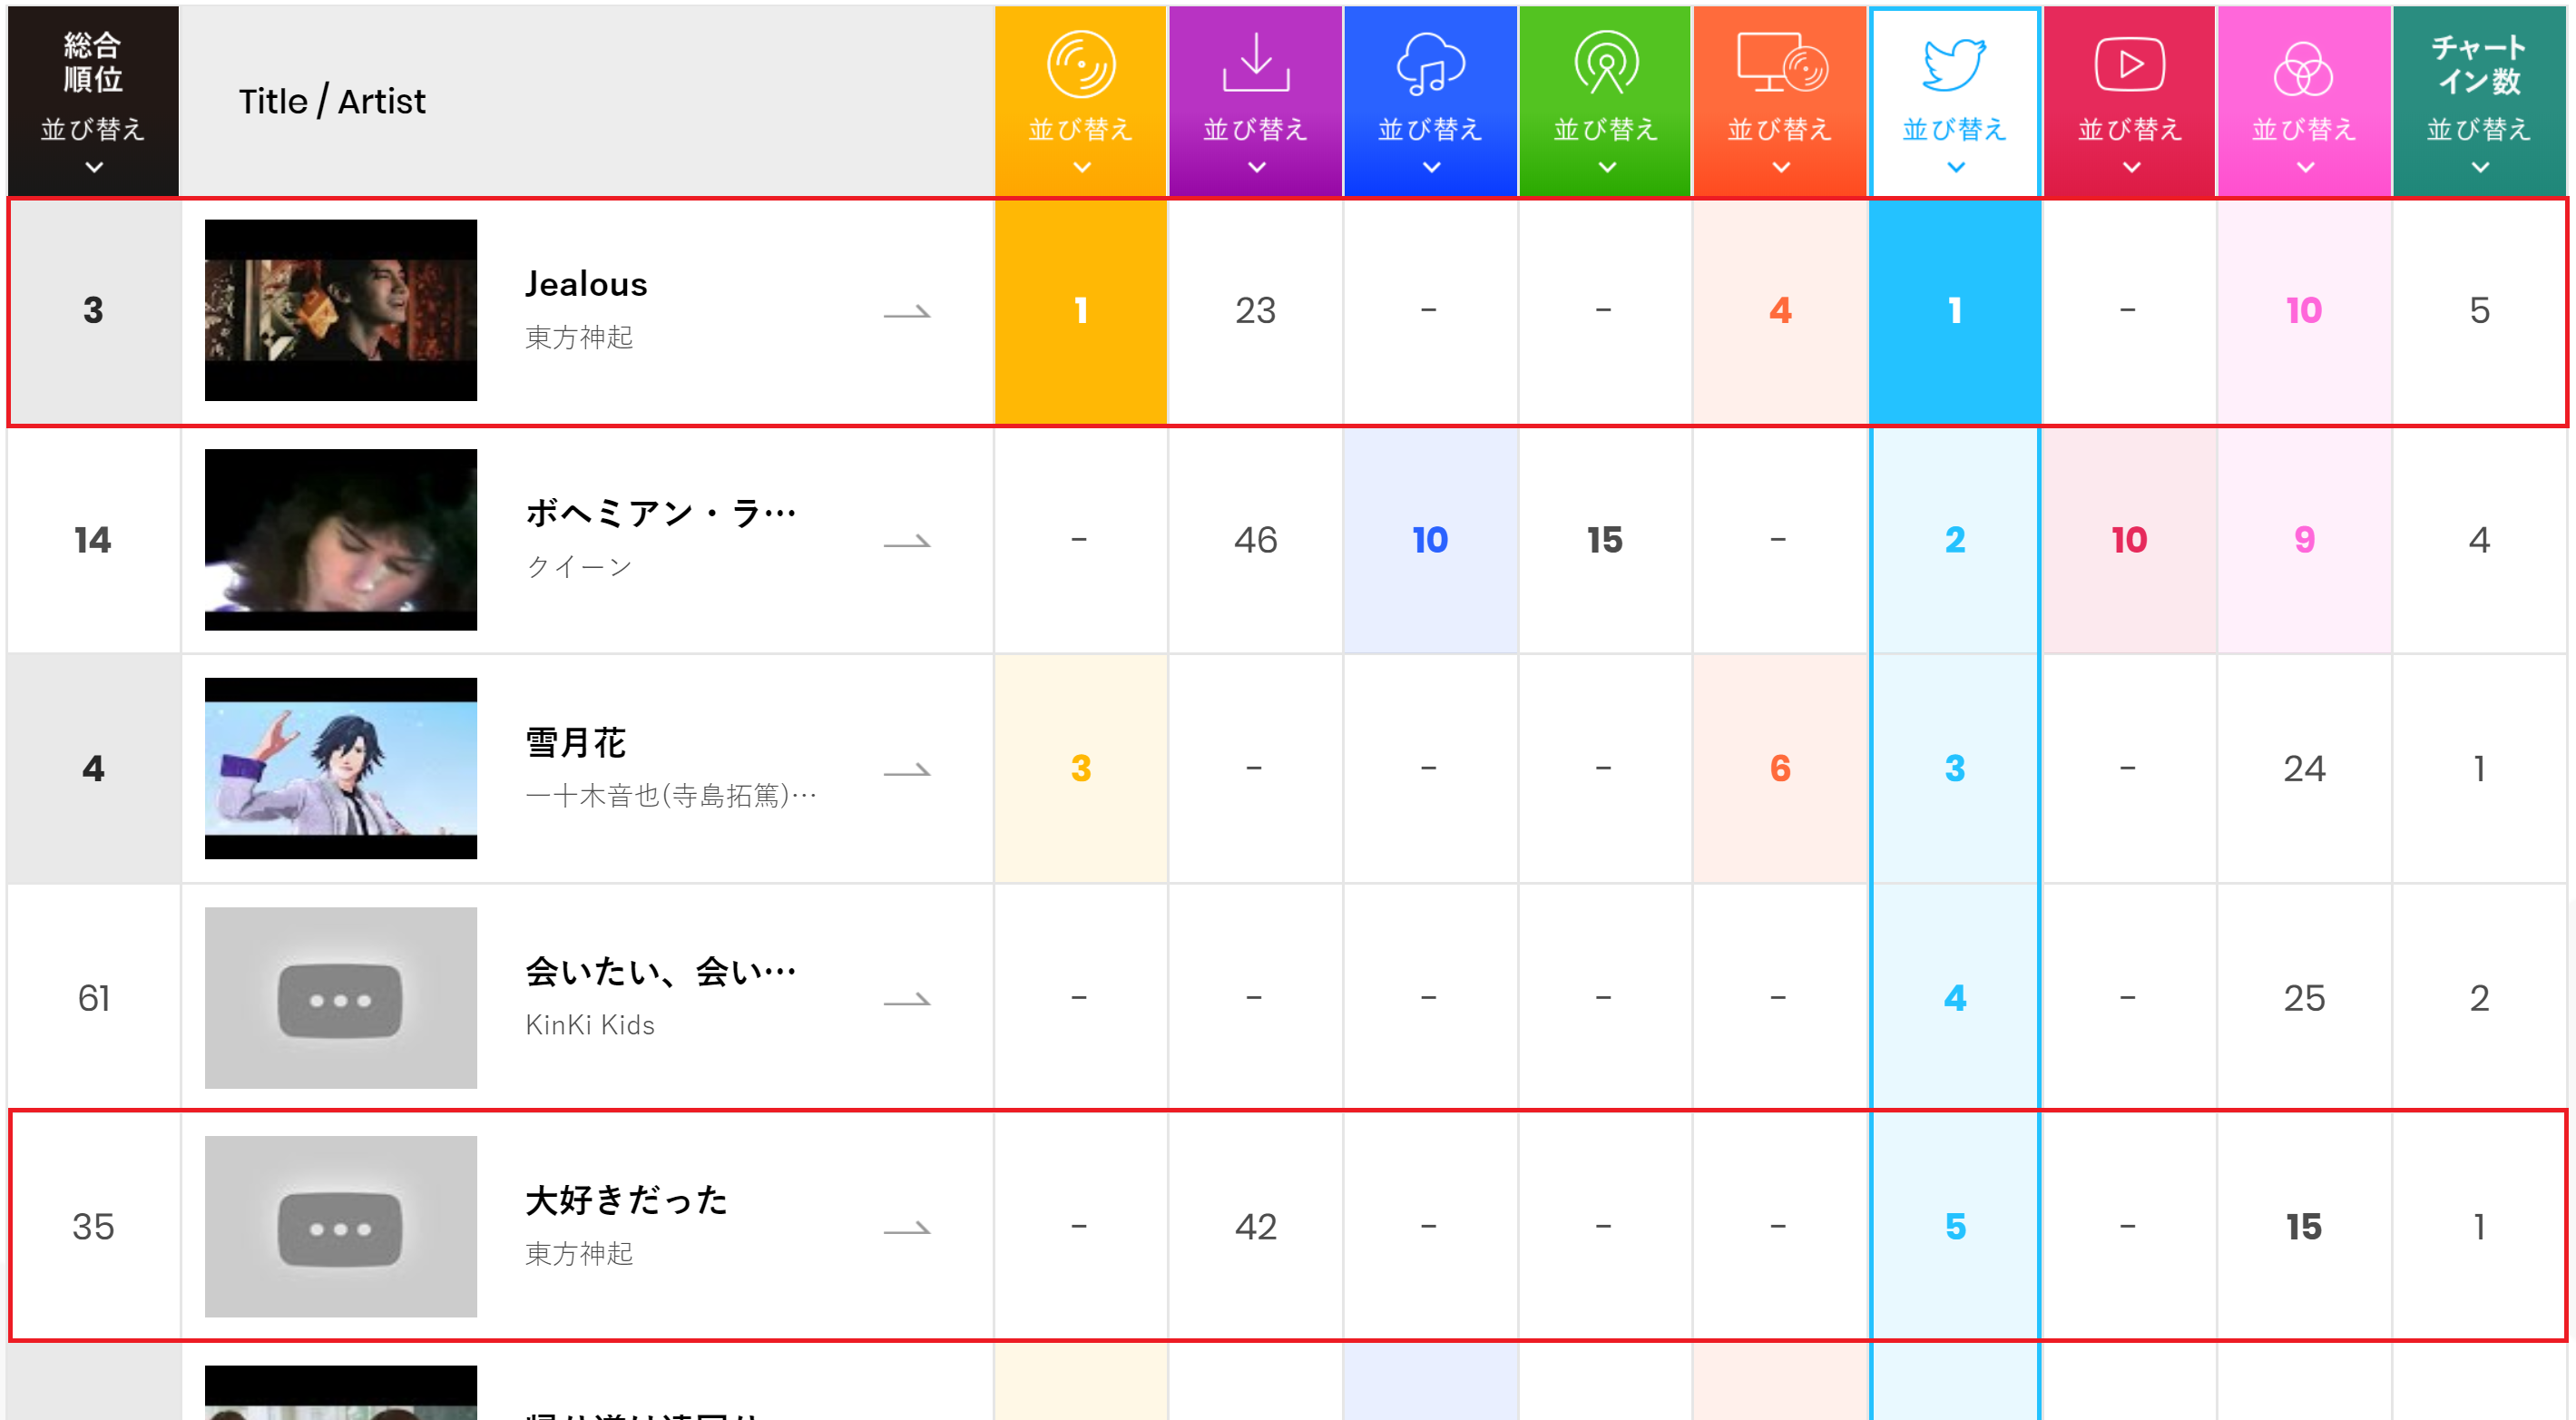 Billboard Japan Album Chart